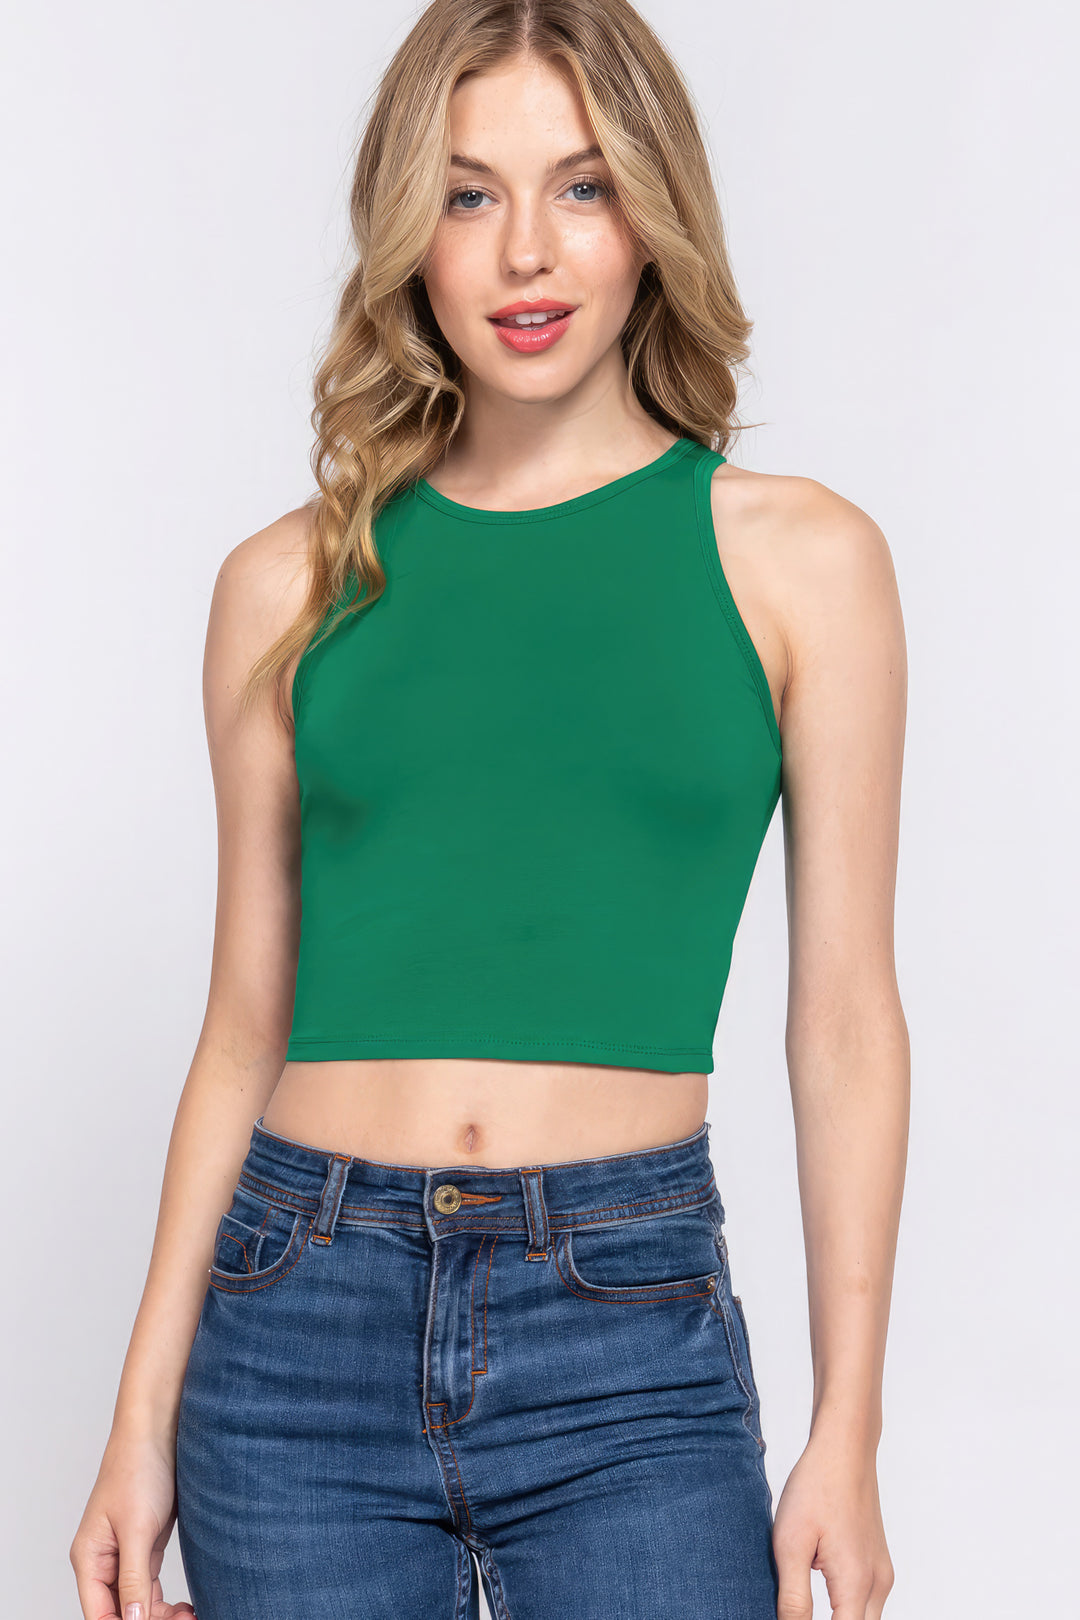 Deep Green Halter Neck Crop Top | Polyester-Spandex Blend, Trendy Design - Sizes S-L